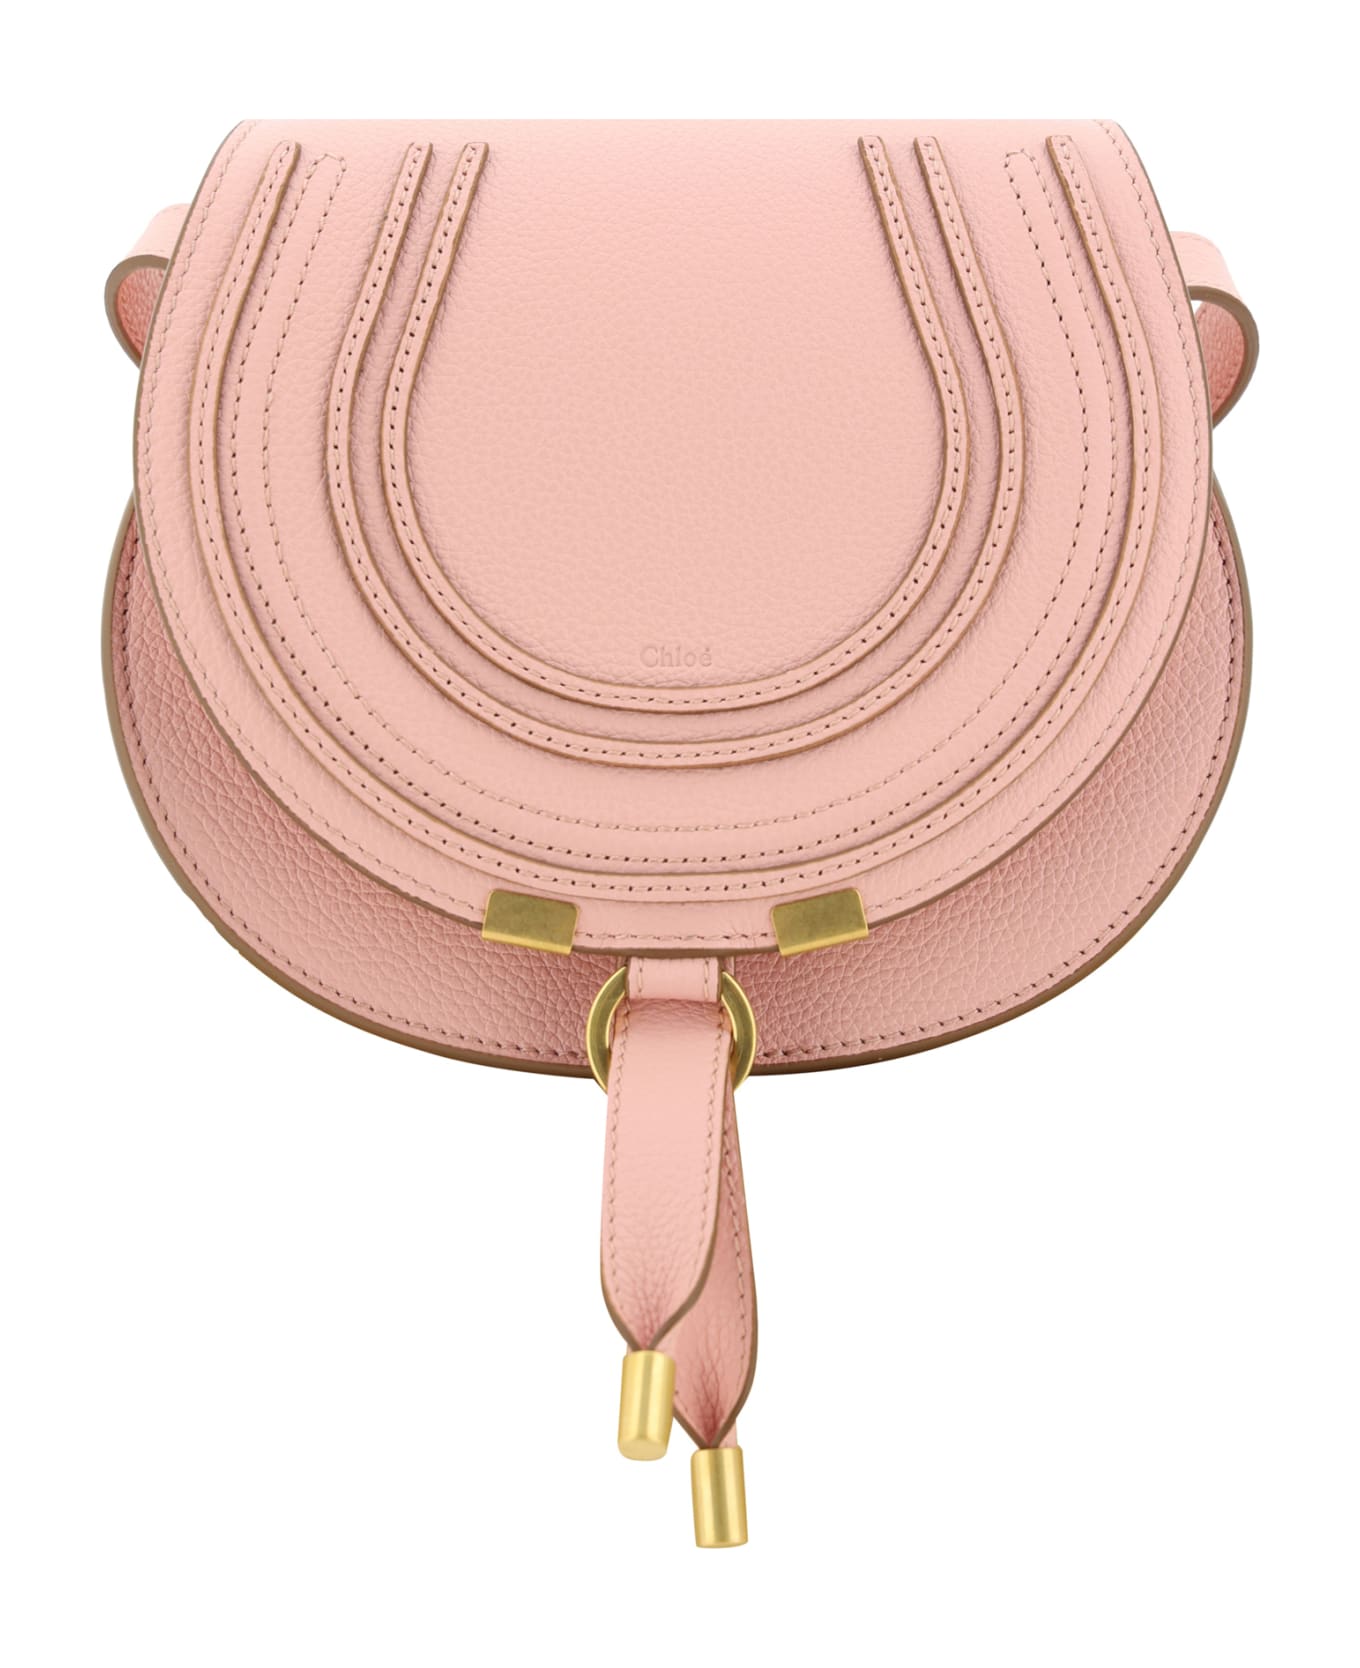 Chloé Small 'marcie' Shoulder Bag - Blossom Pink